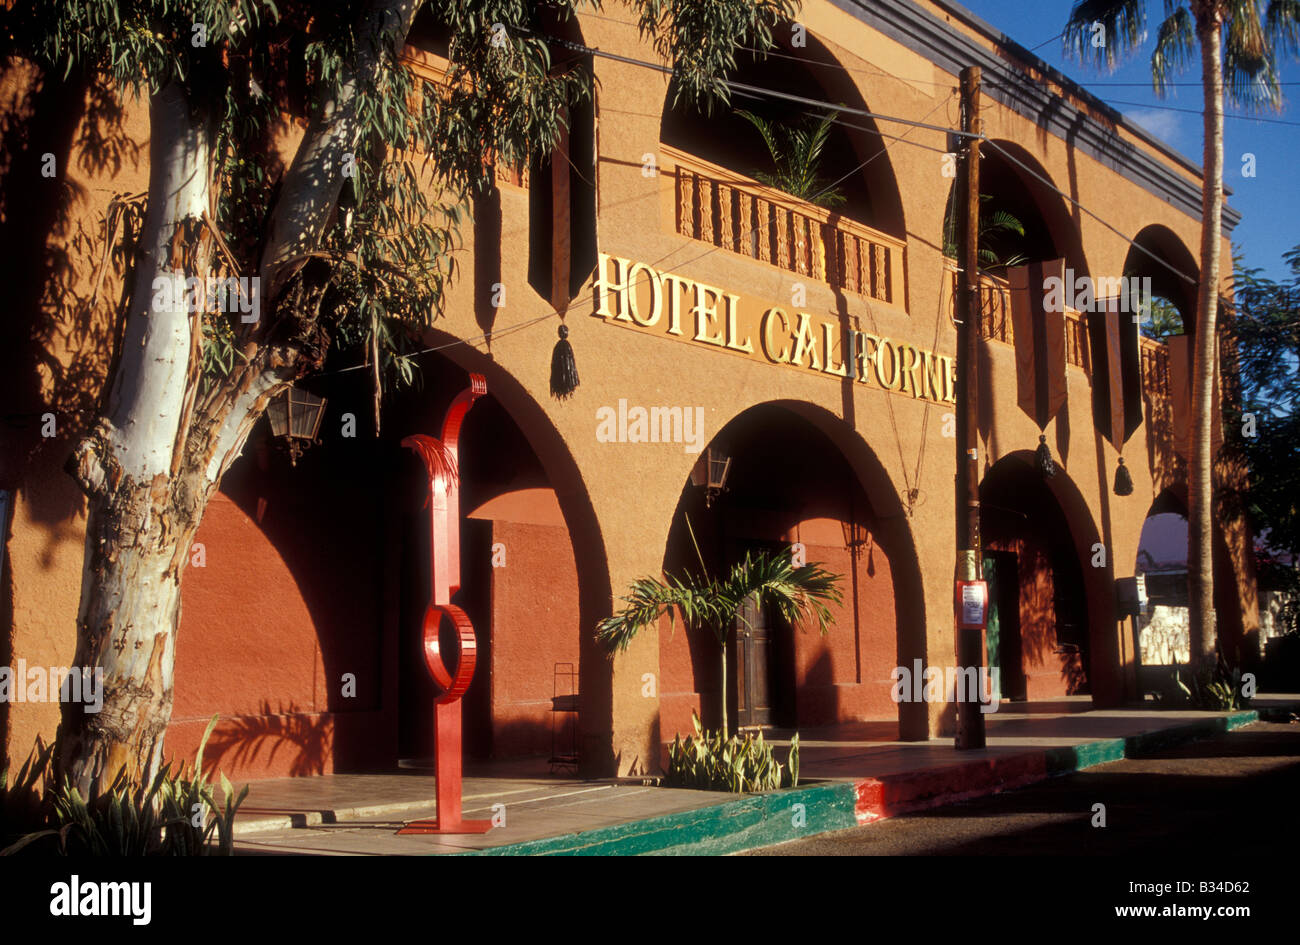 Das Hotel California in der spanischen Kolonialstadt von Todos Santos, Baja California Sur, Mexiko Stockfoto